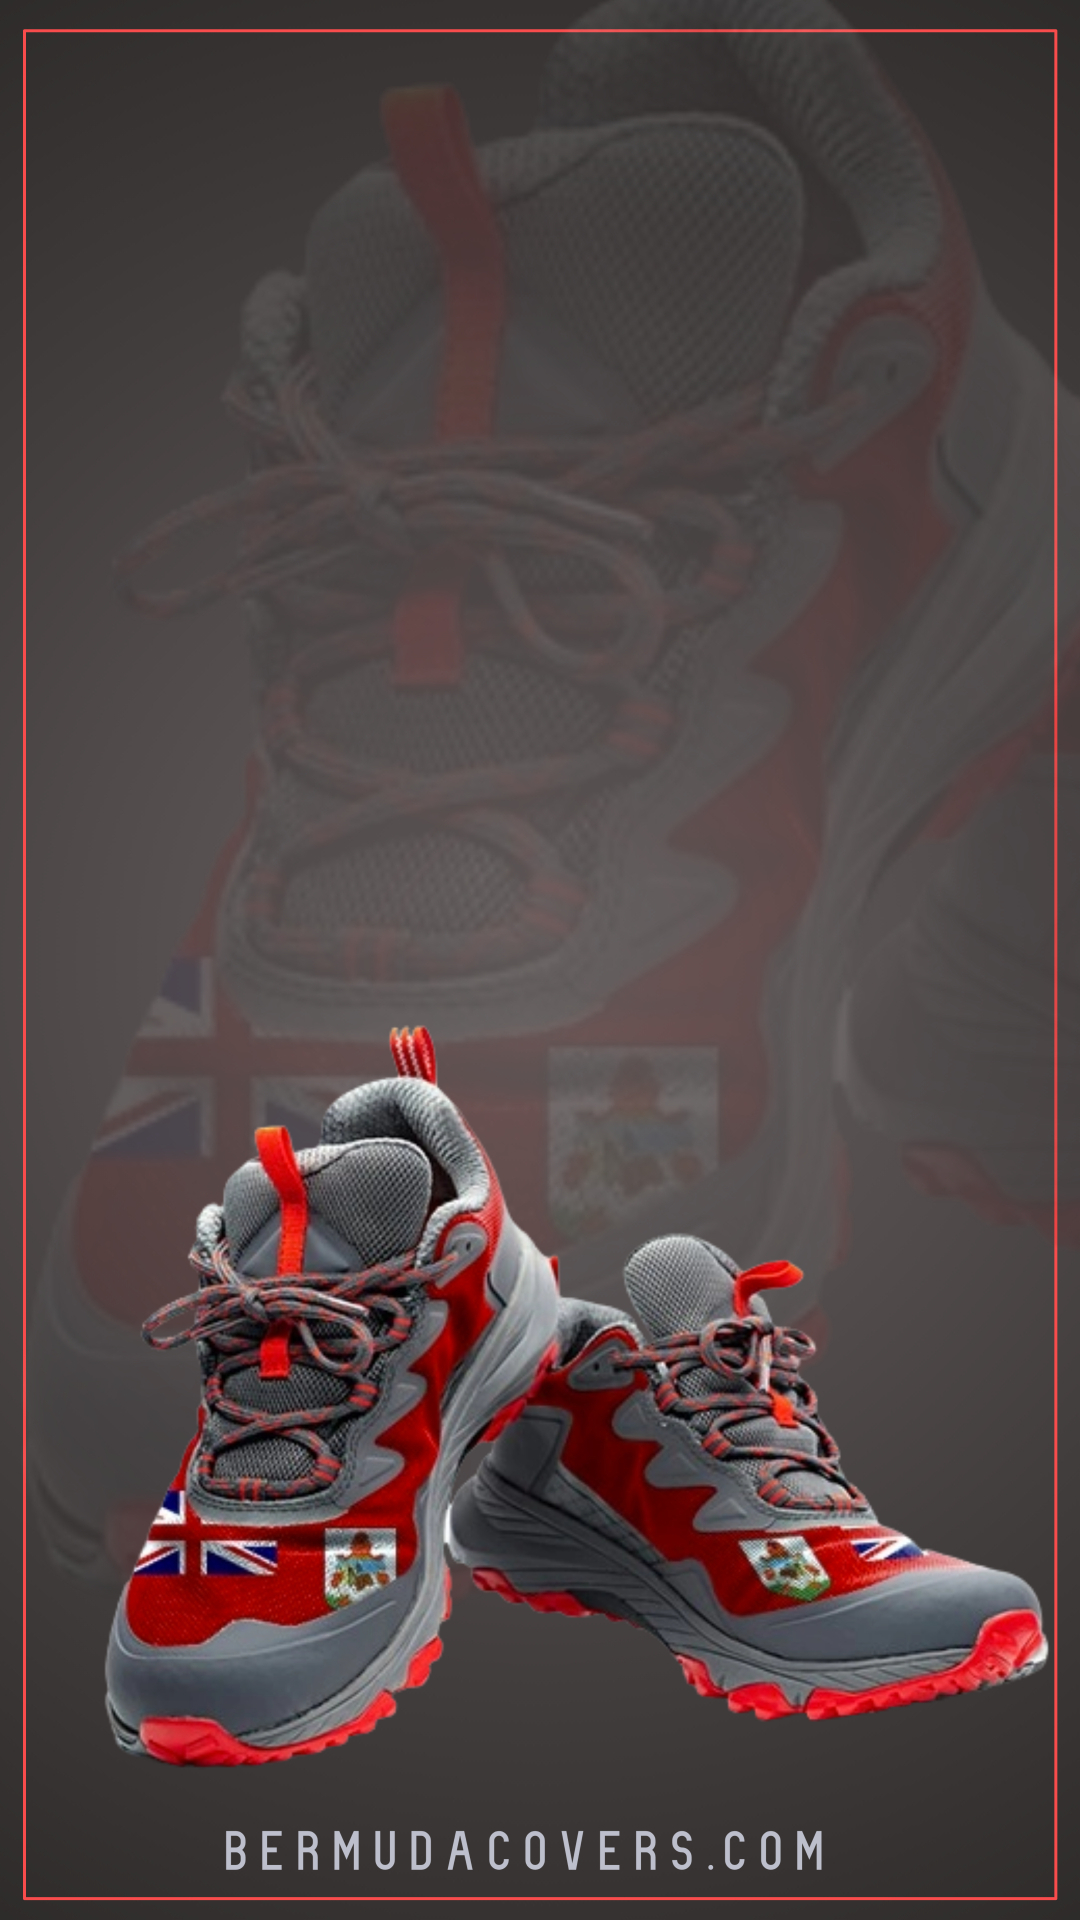 Just for kicks red bermuda sneakers social media graphic covers 43532532 (2)